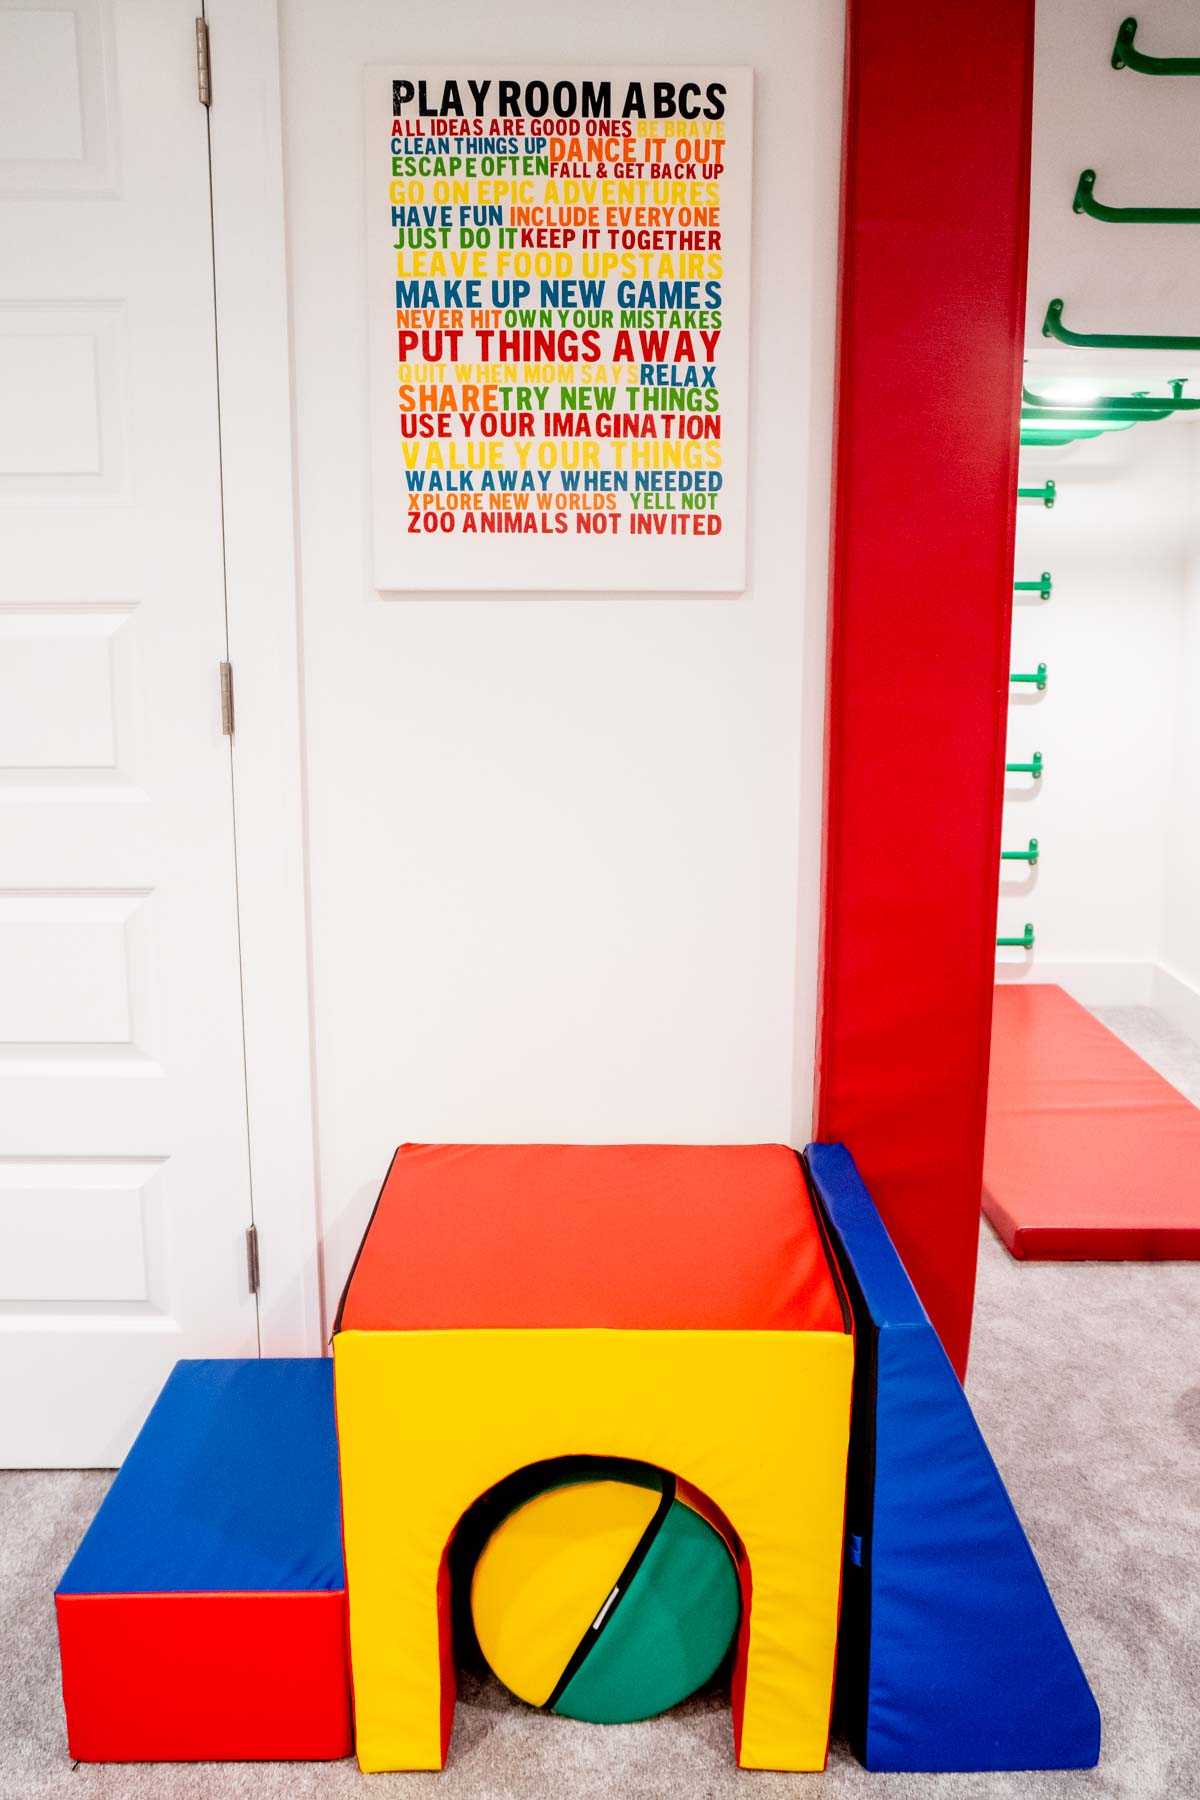 playroom rules sign above foam blocks